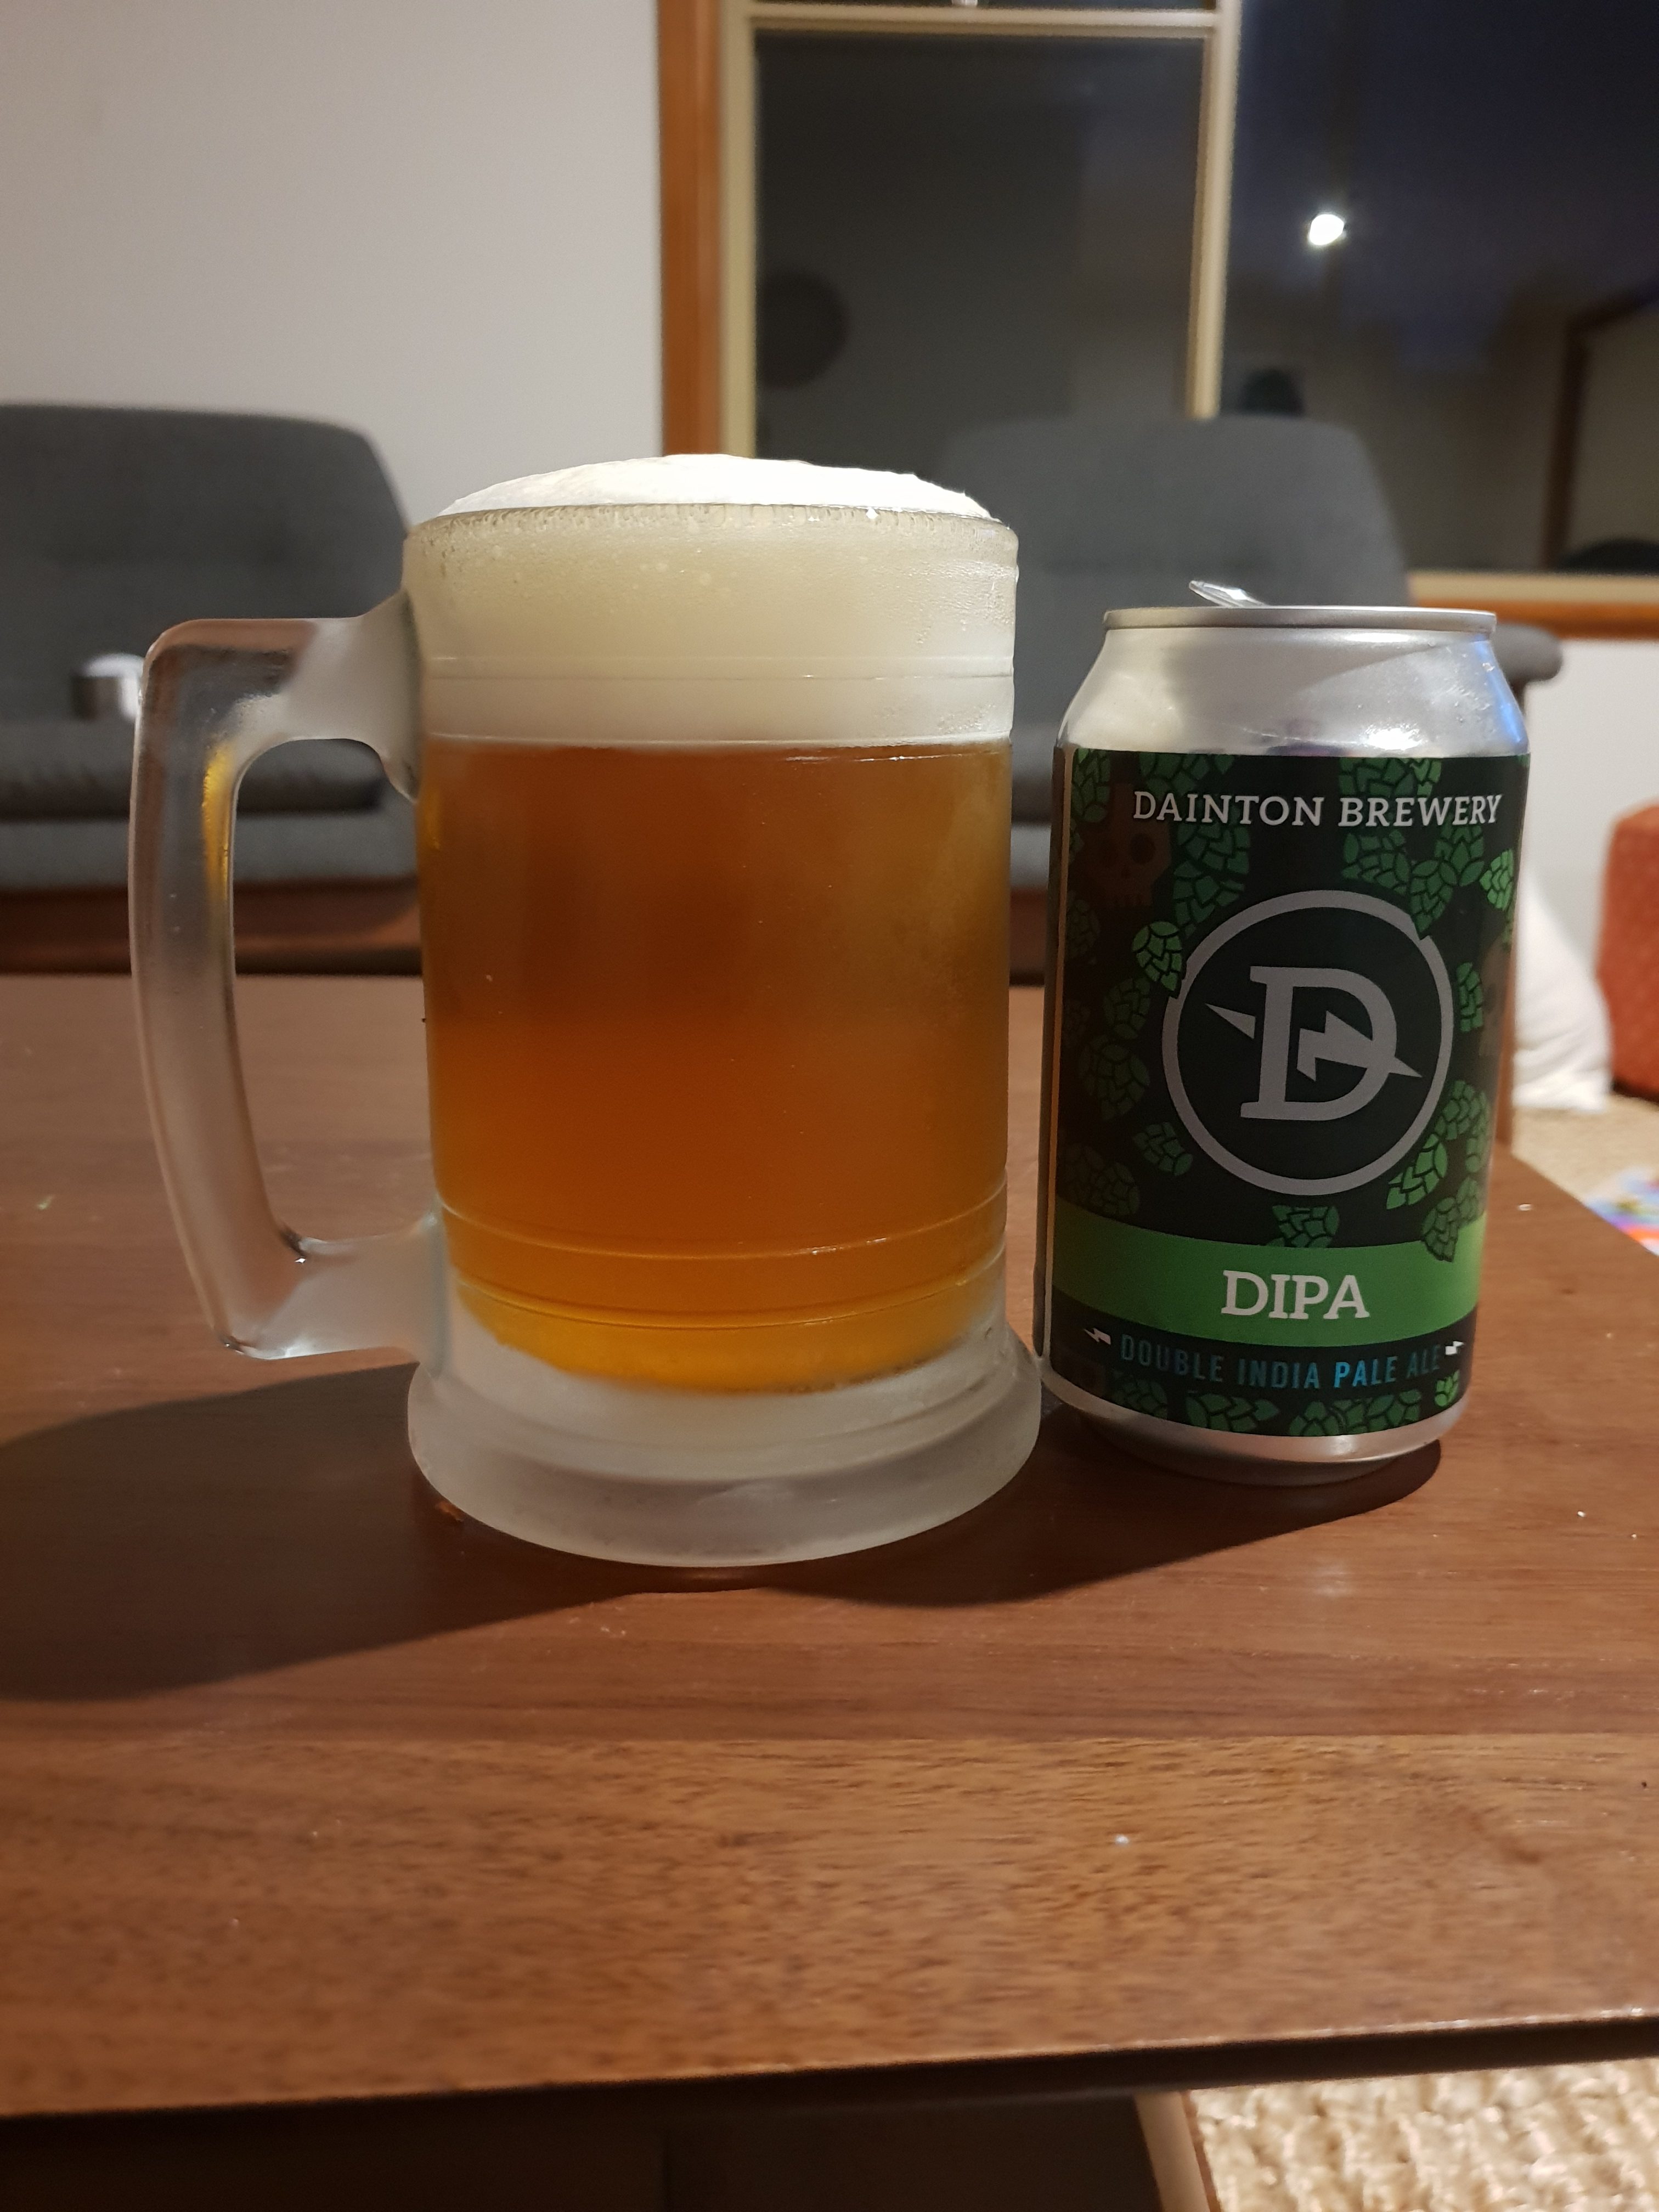 DIPA by Dainton Brewery